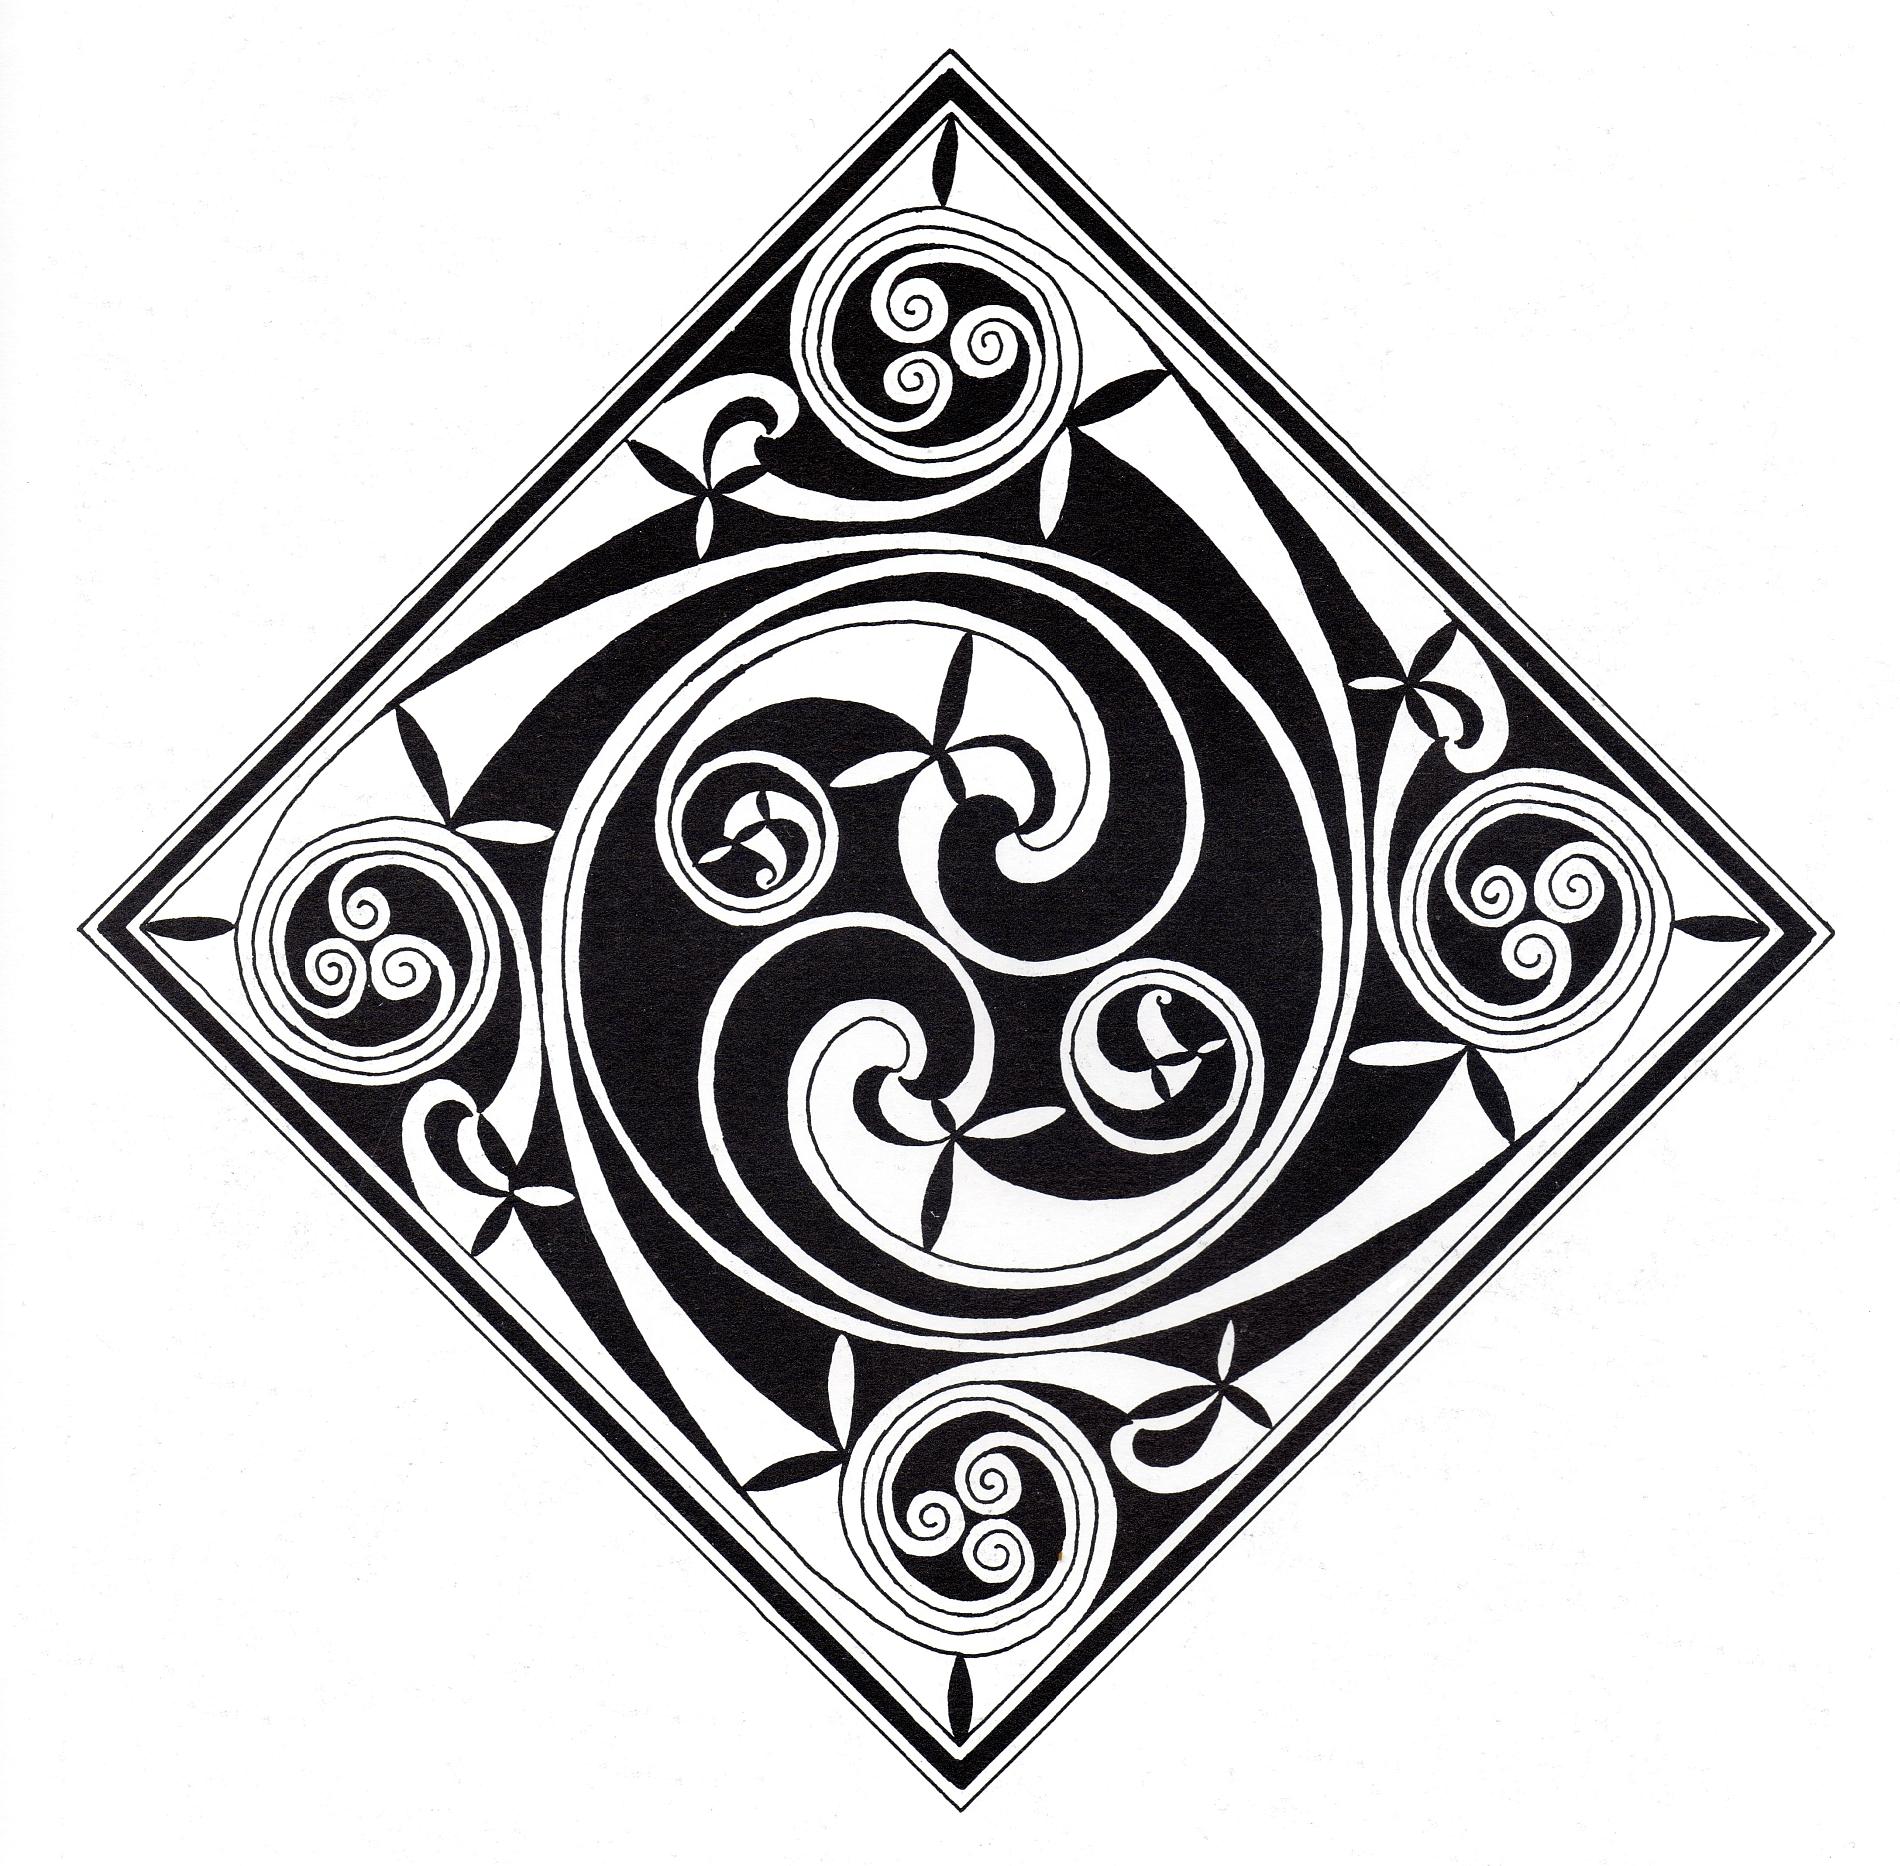 Complex Celtic art